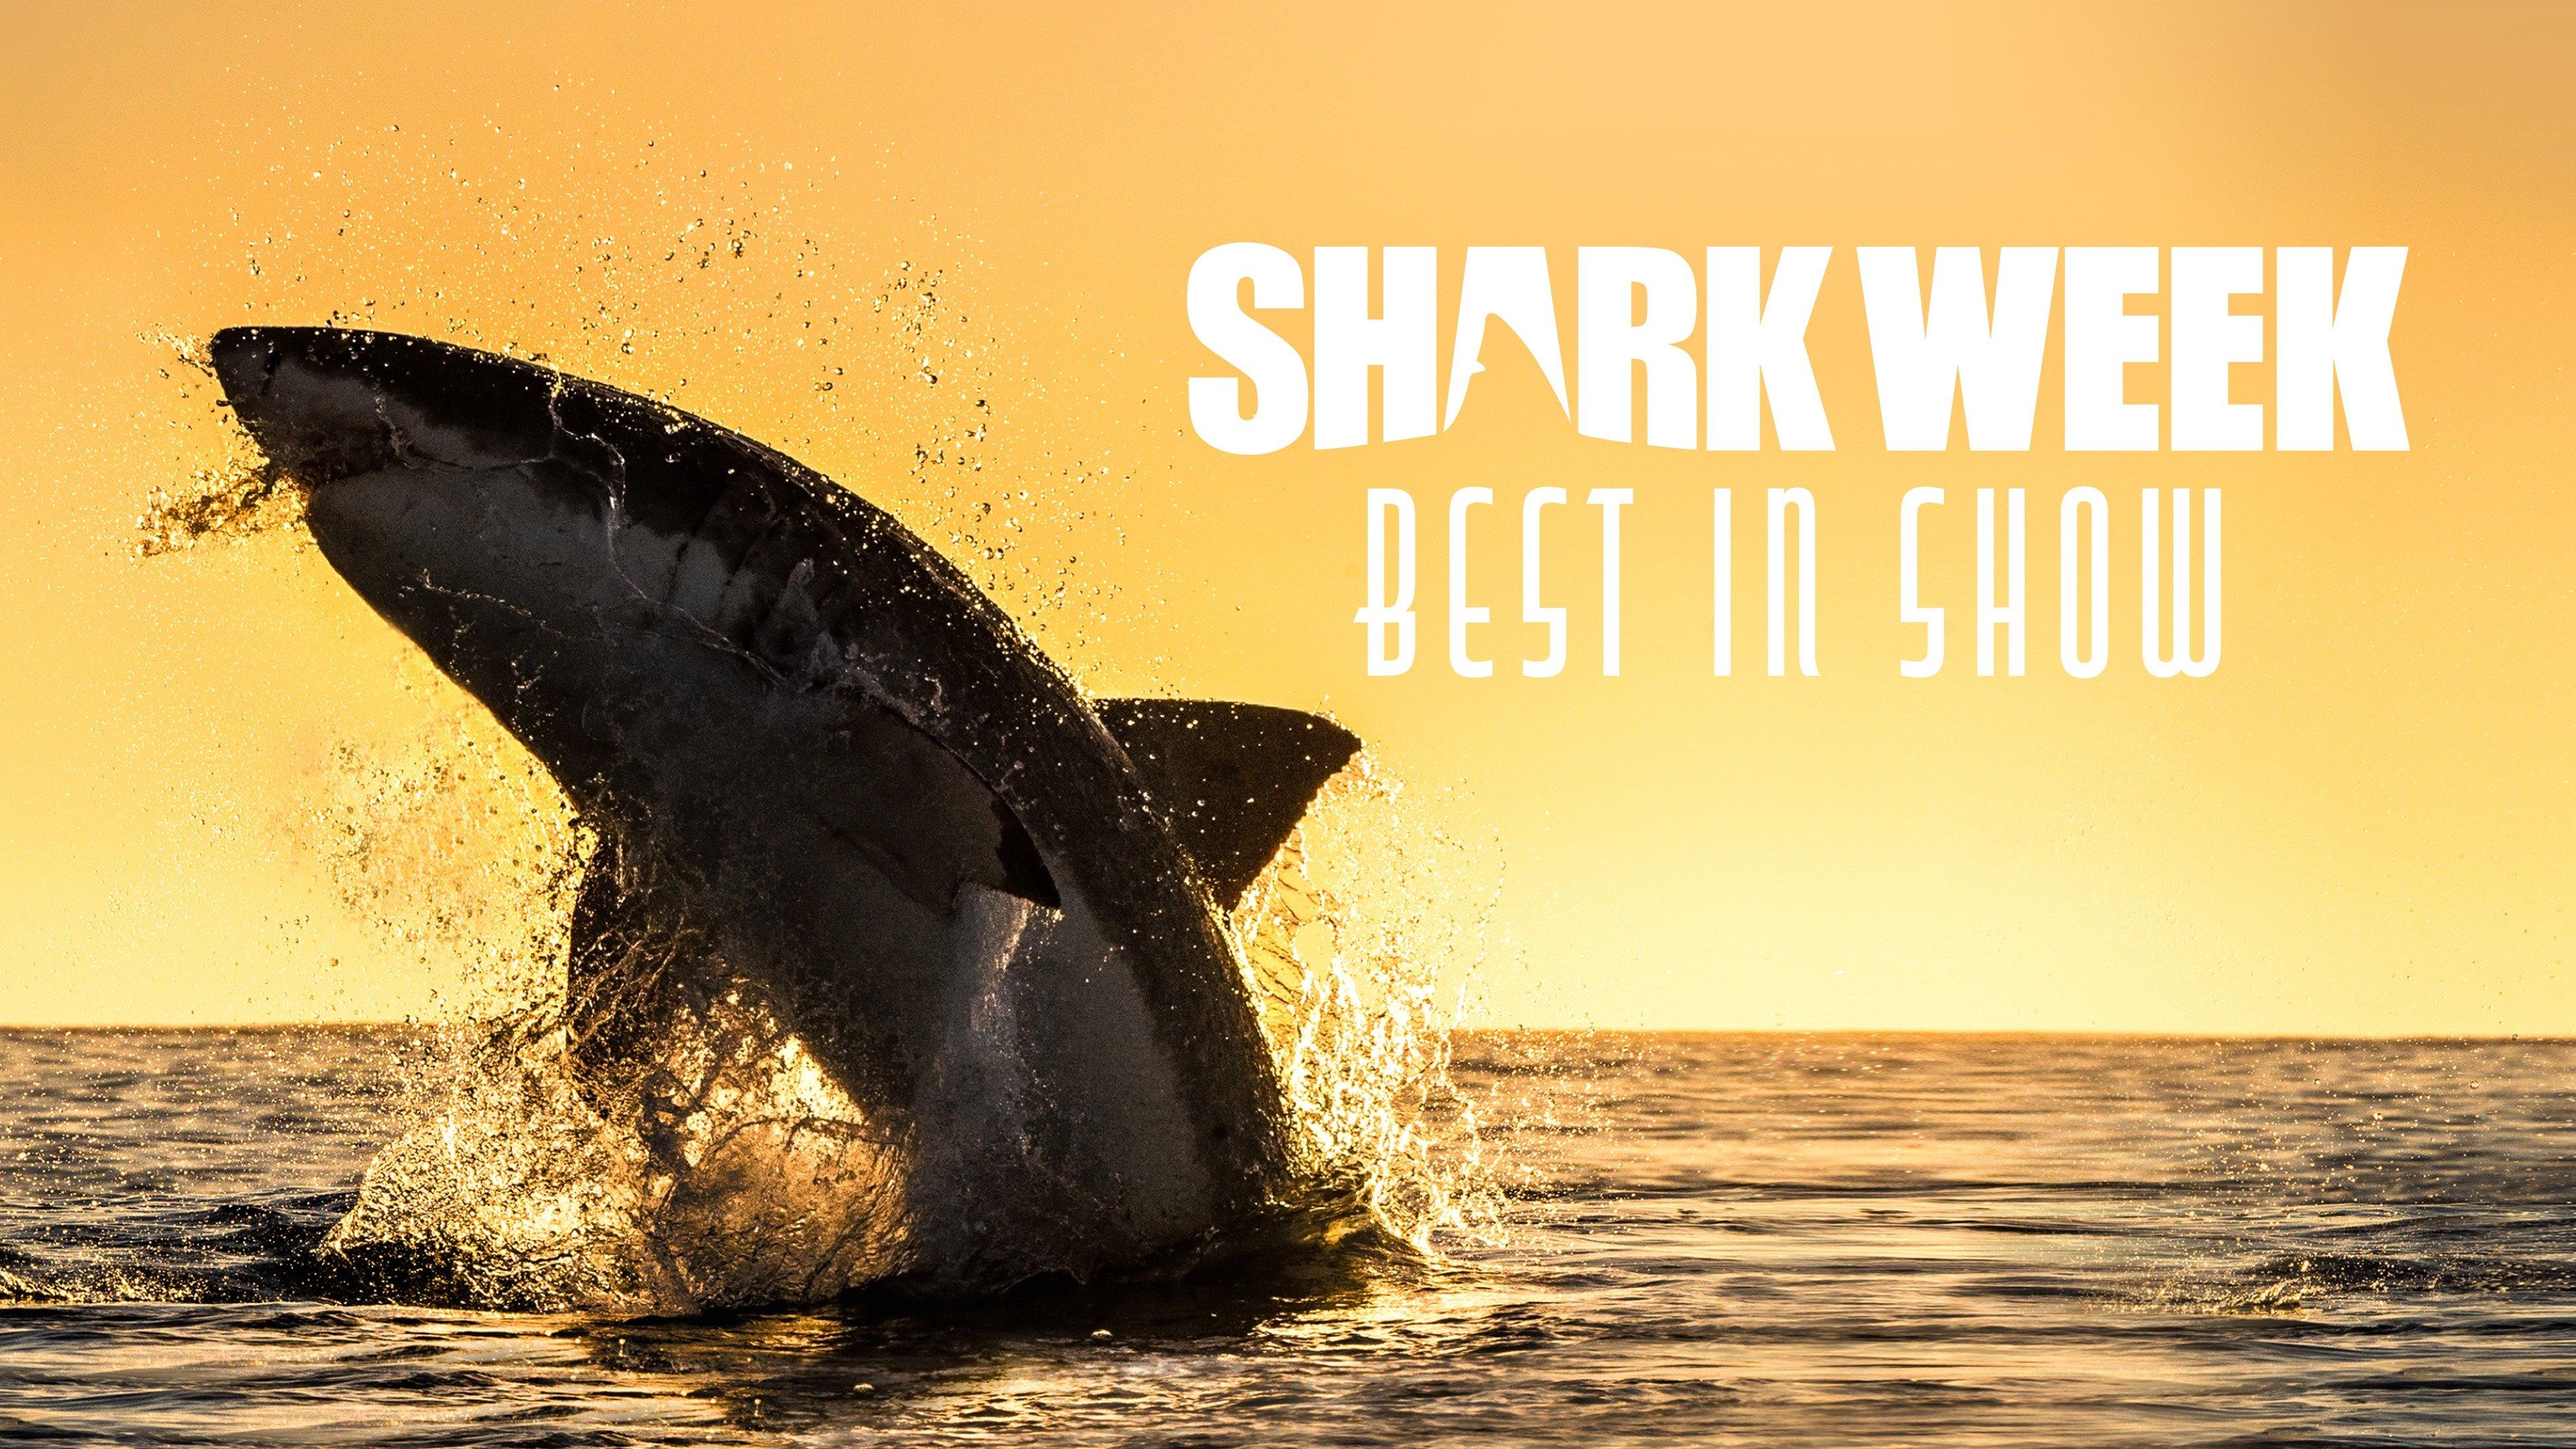 Watch Shark Week Best In Show Streaming Online on Philo (Free Trial)